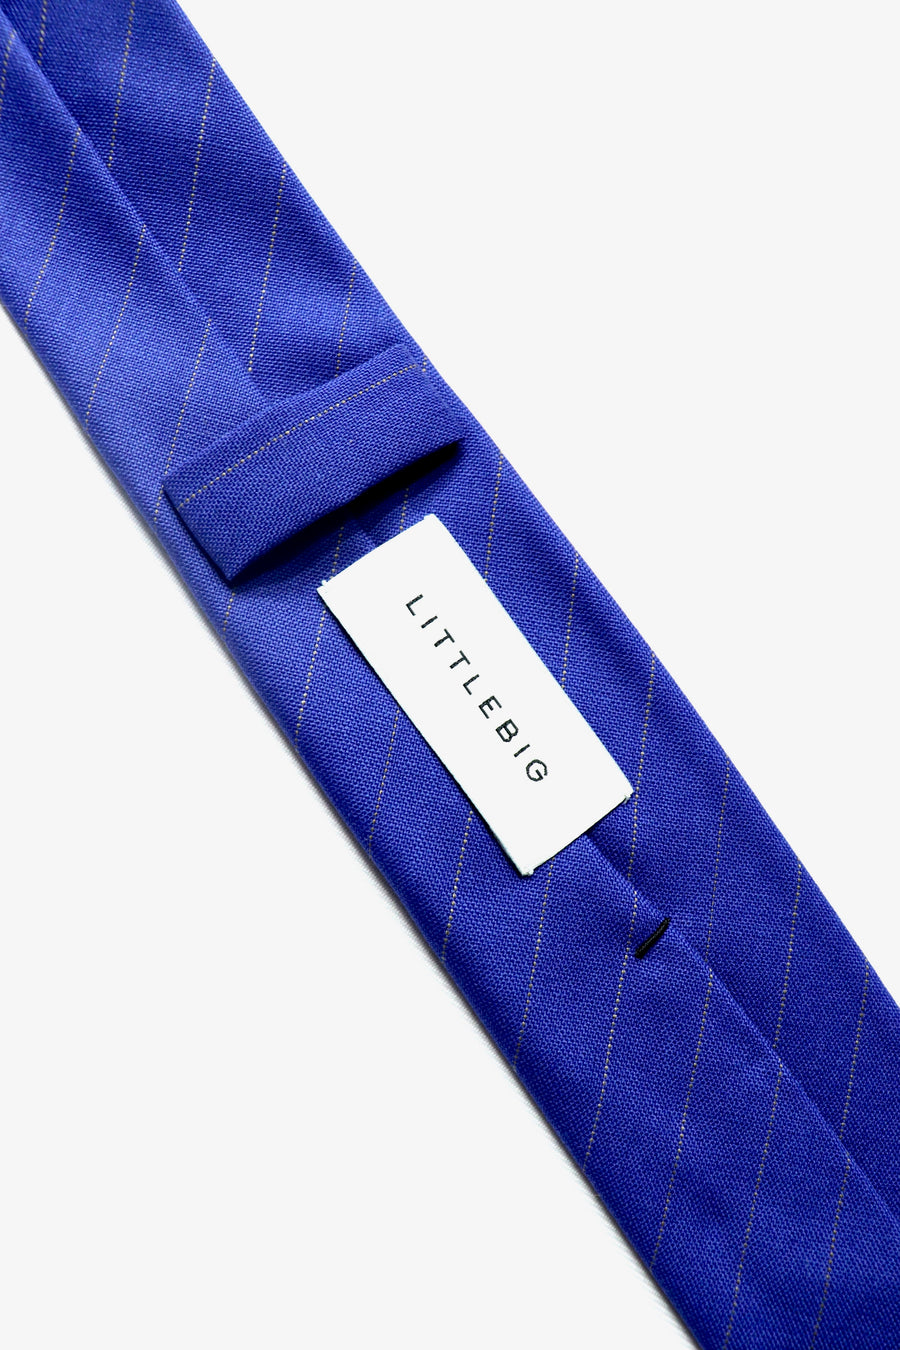 LITTLEBIG  Striped Tie